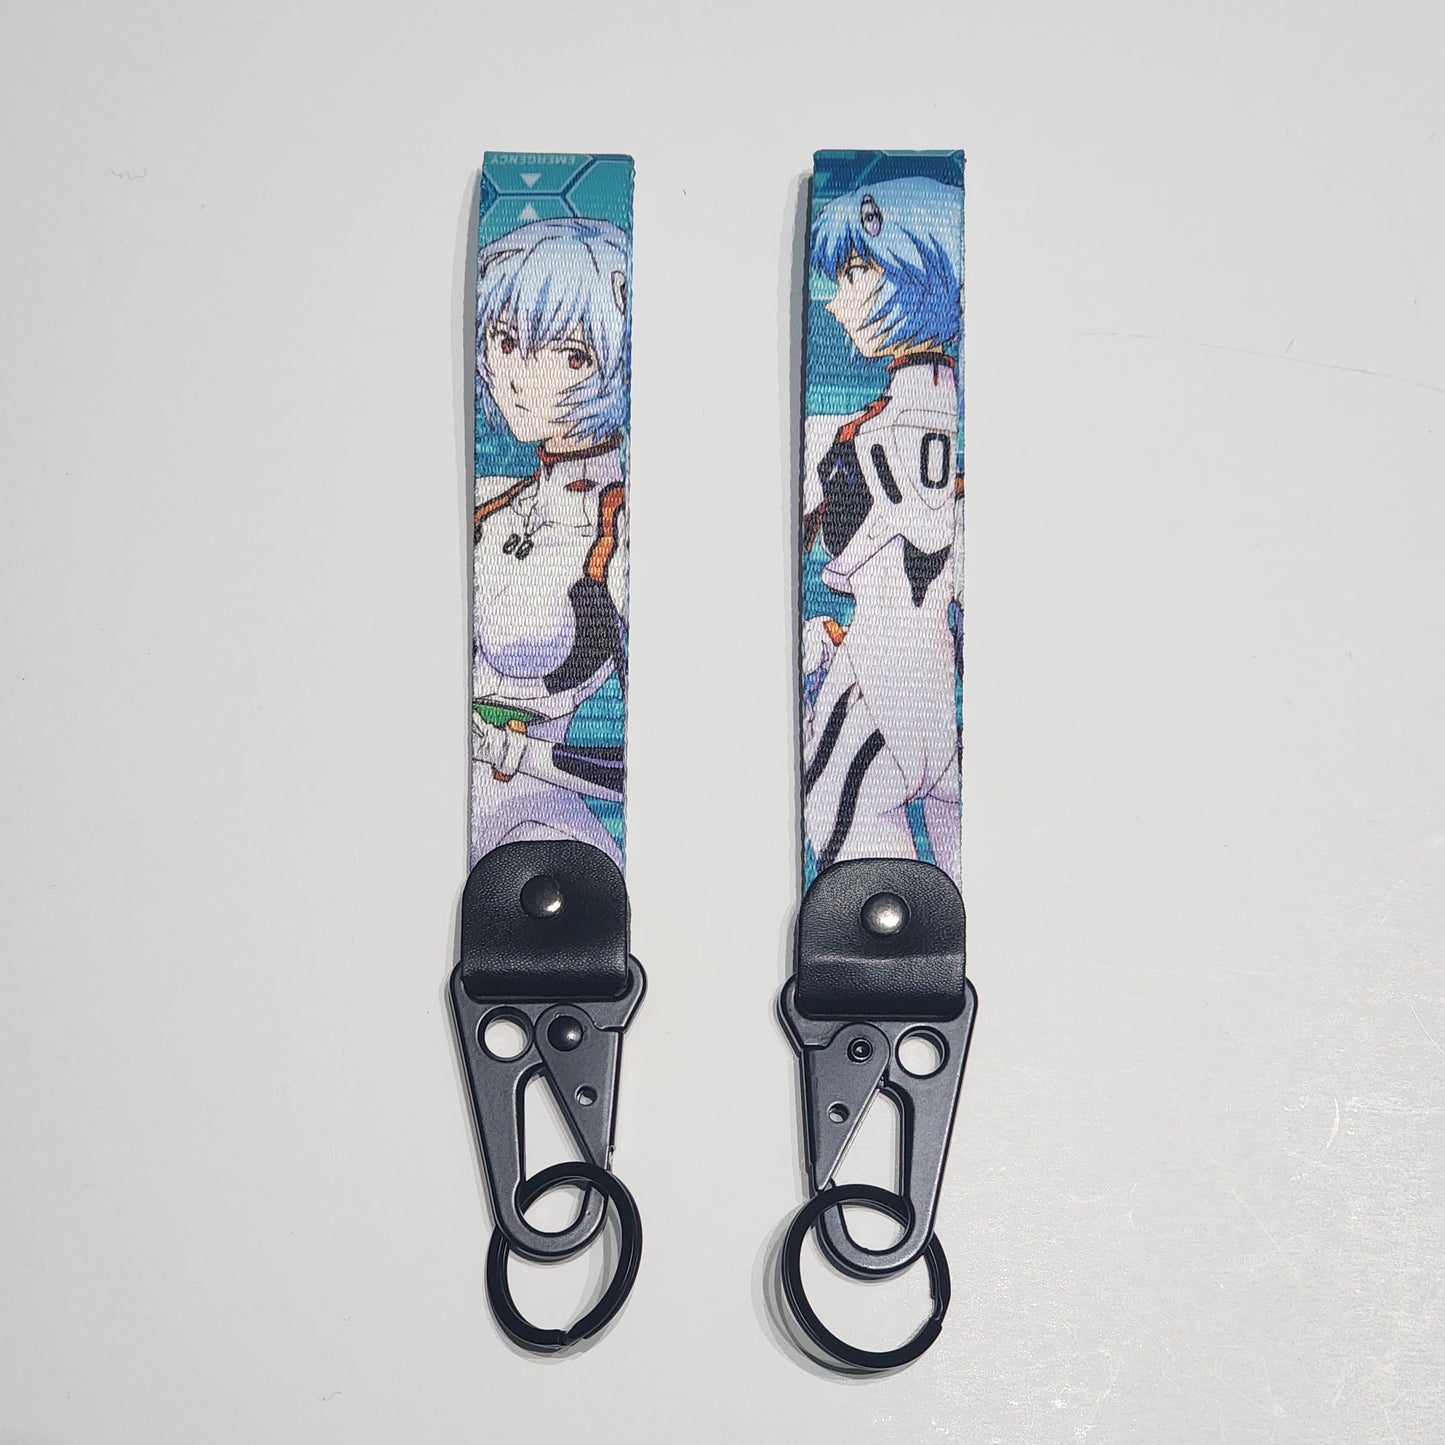 Anime Keychain Strap